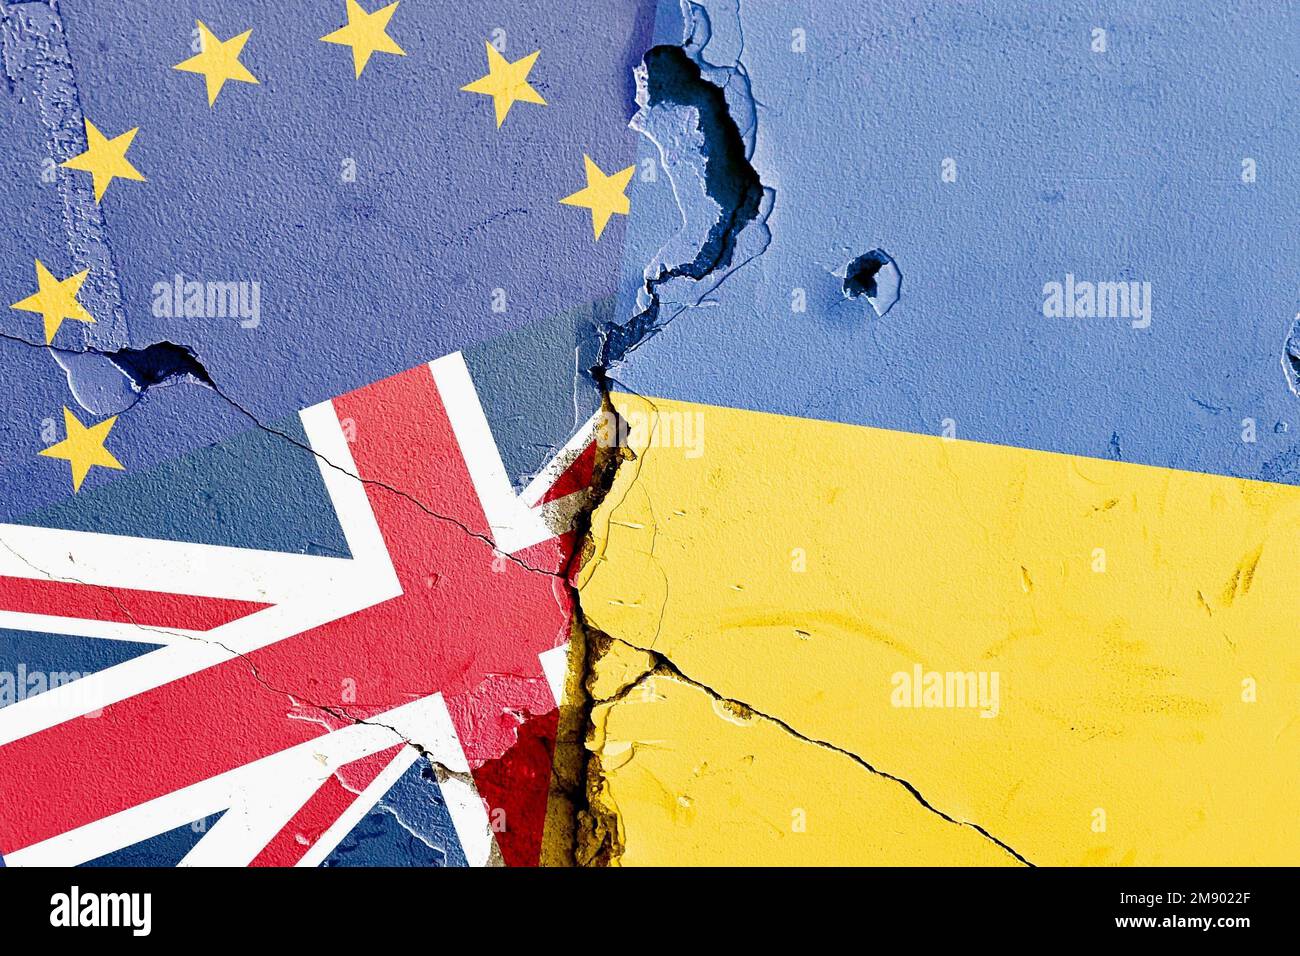 EU (European Union), UK (Great Britain), Ukraine national flag isolated on broken wall background, international politics conflicts concept Stock Photo